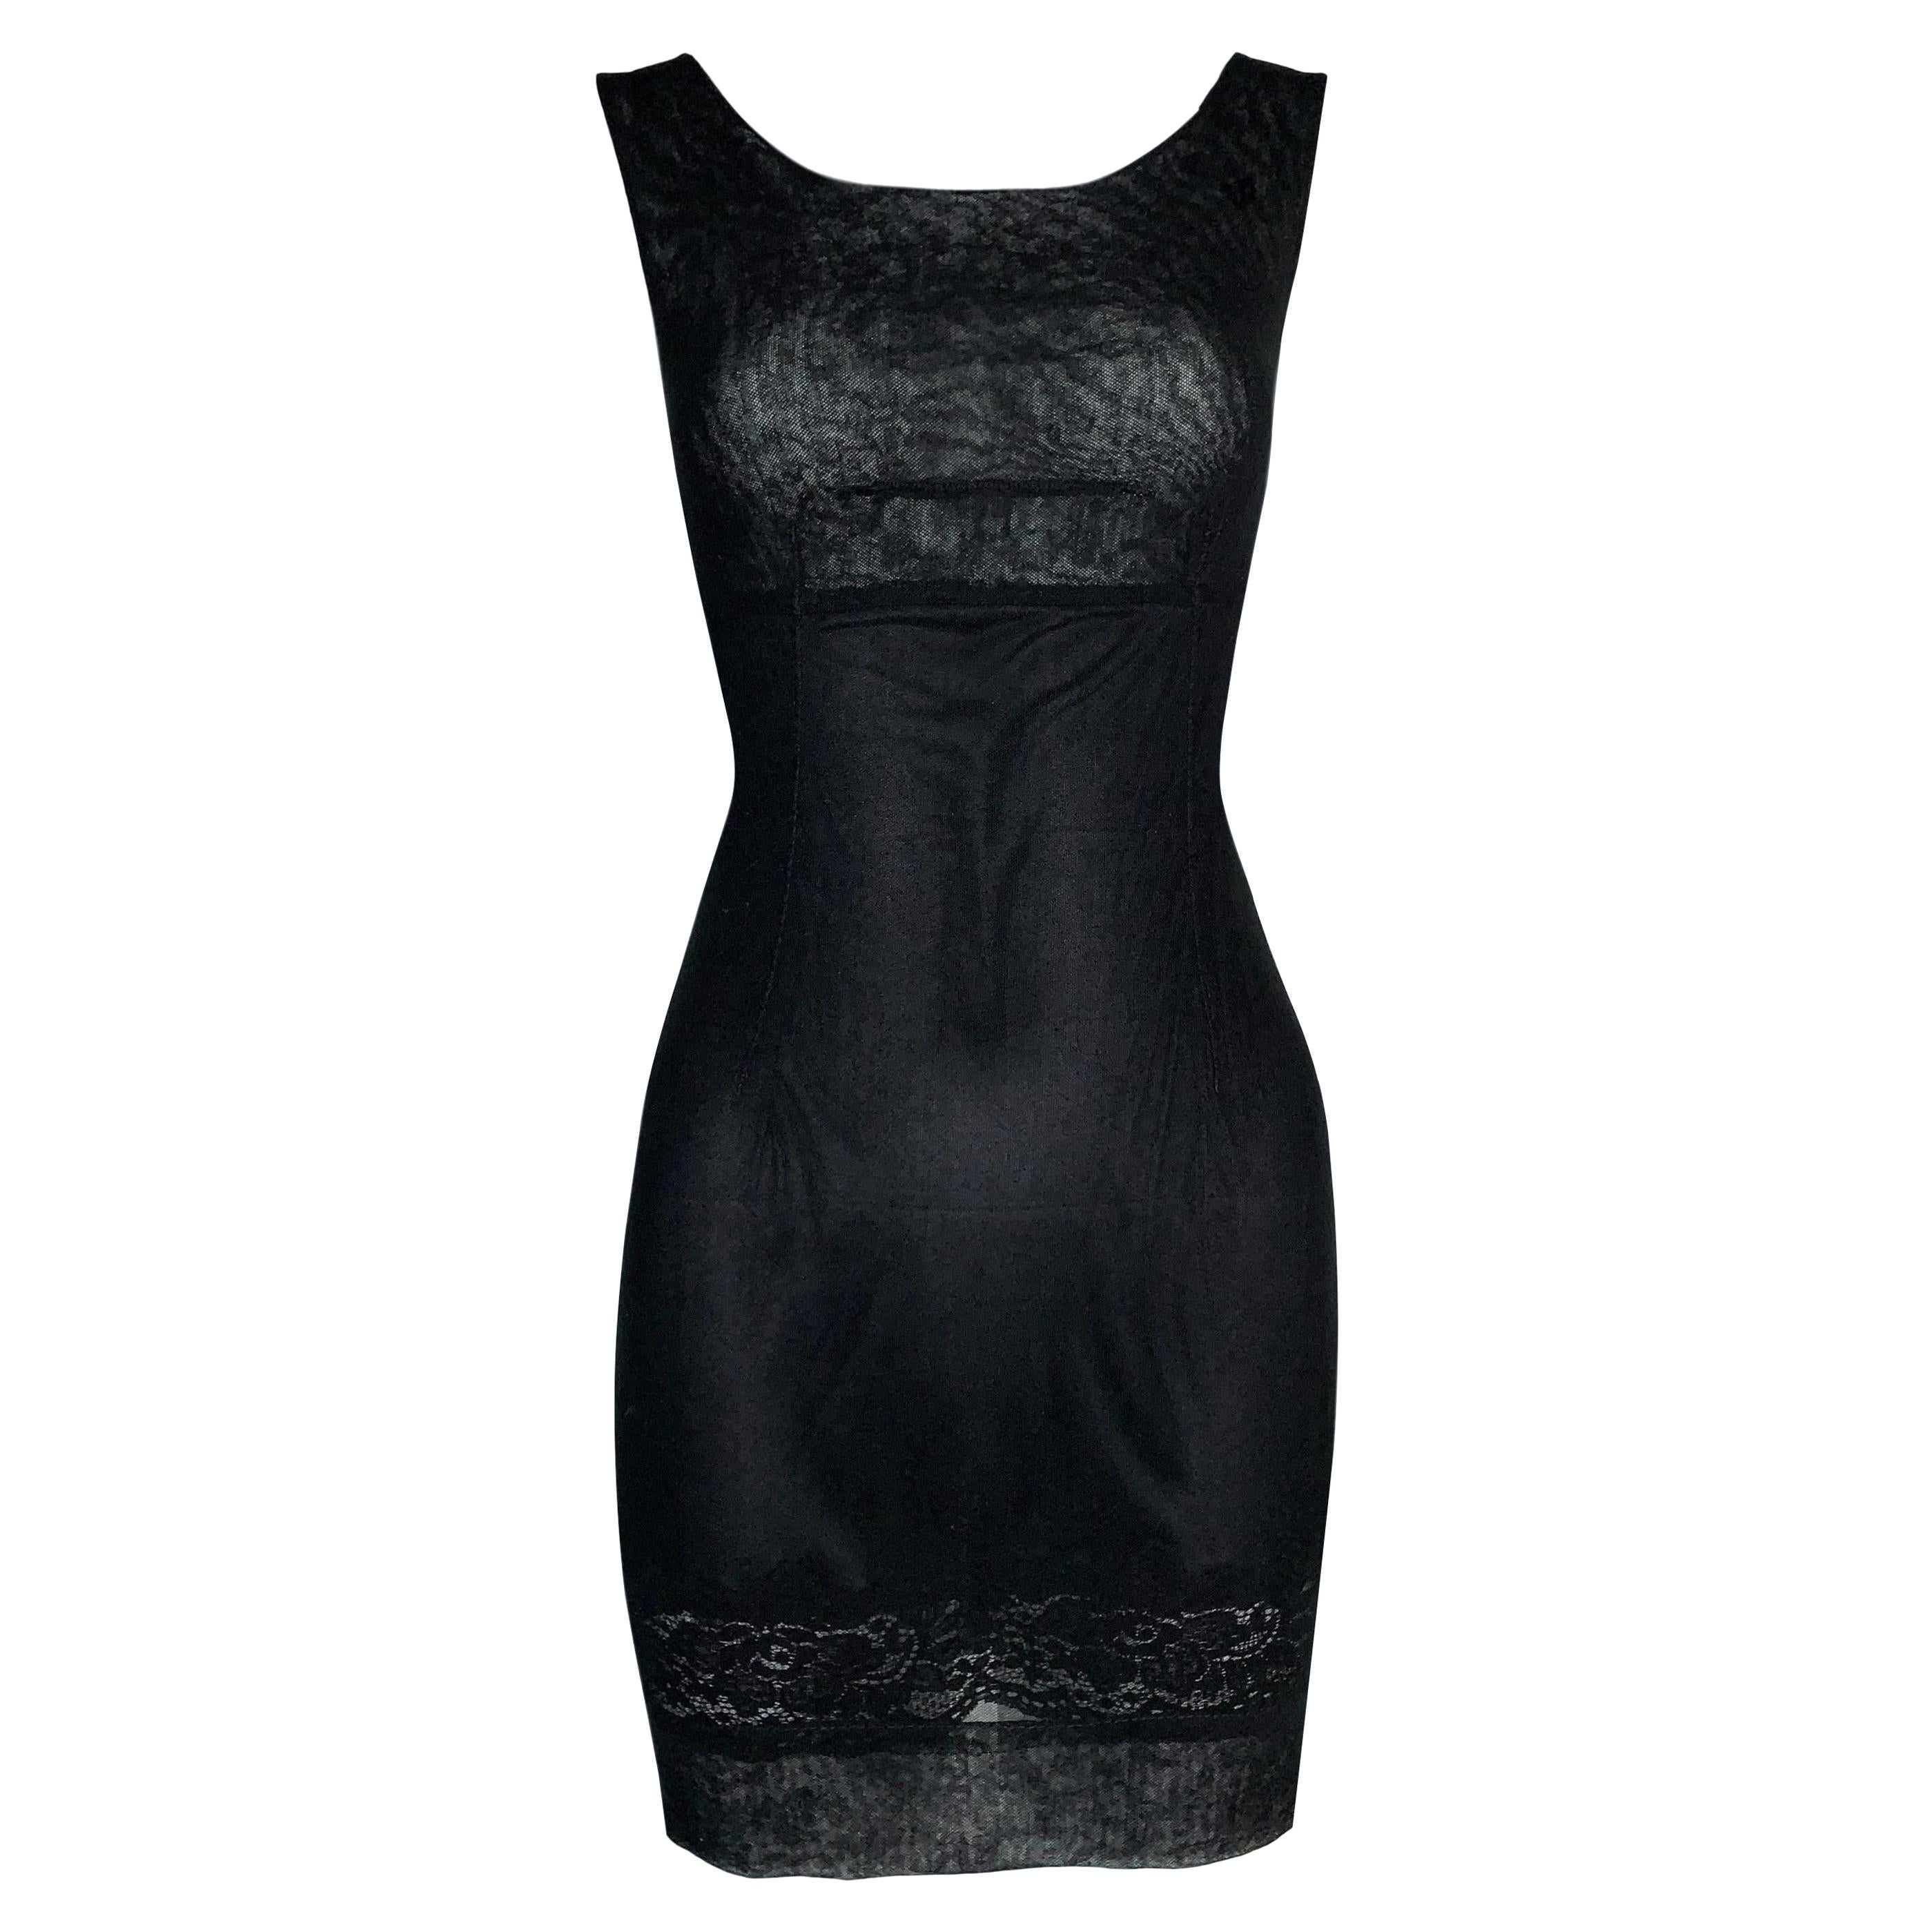 S/S 1998 Dolce & Gabbana Sheer Black Mesh Lace Mini Dress